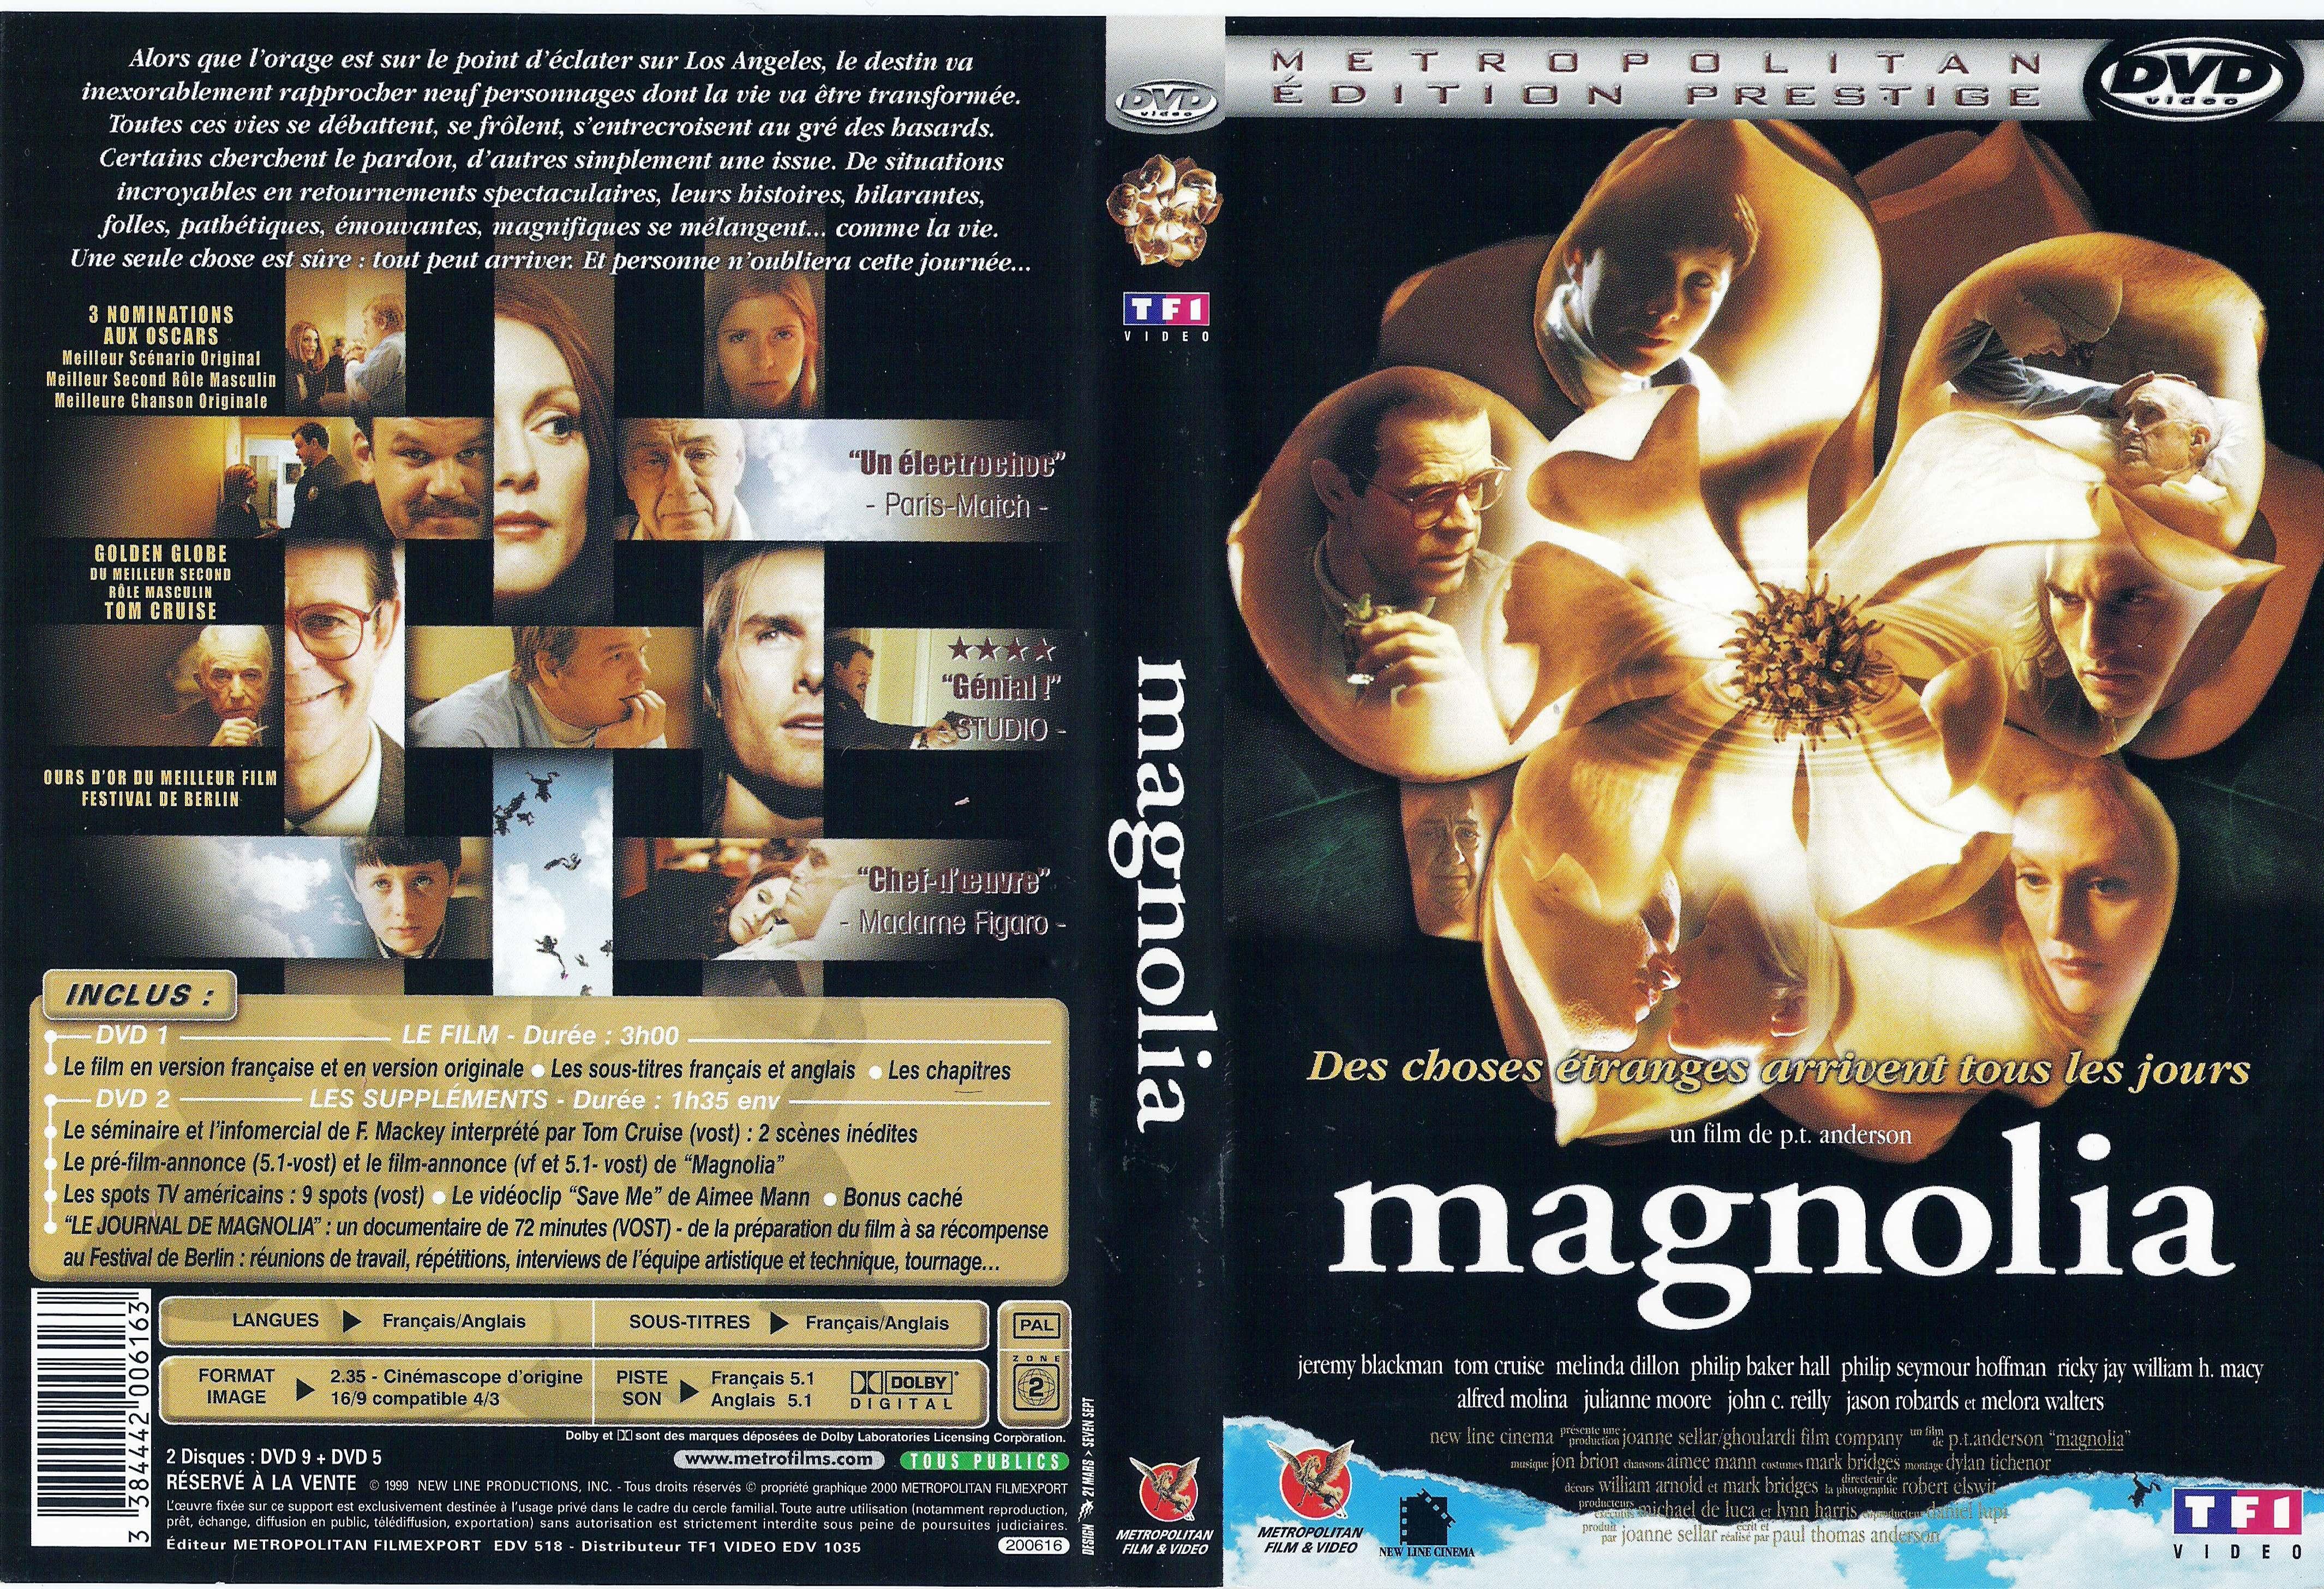 Jaquette DVD Magnolia v2